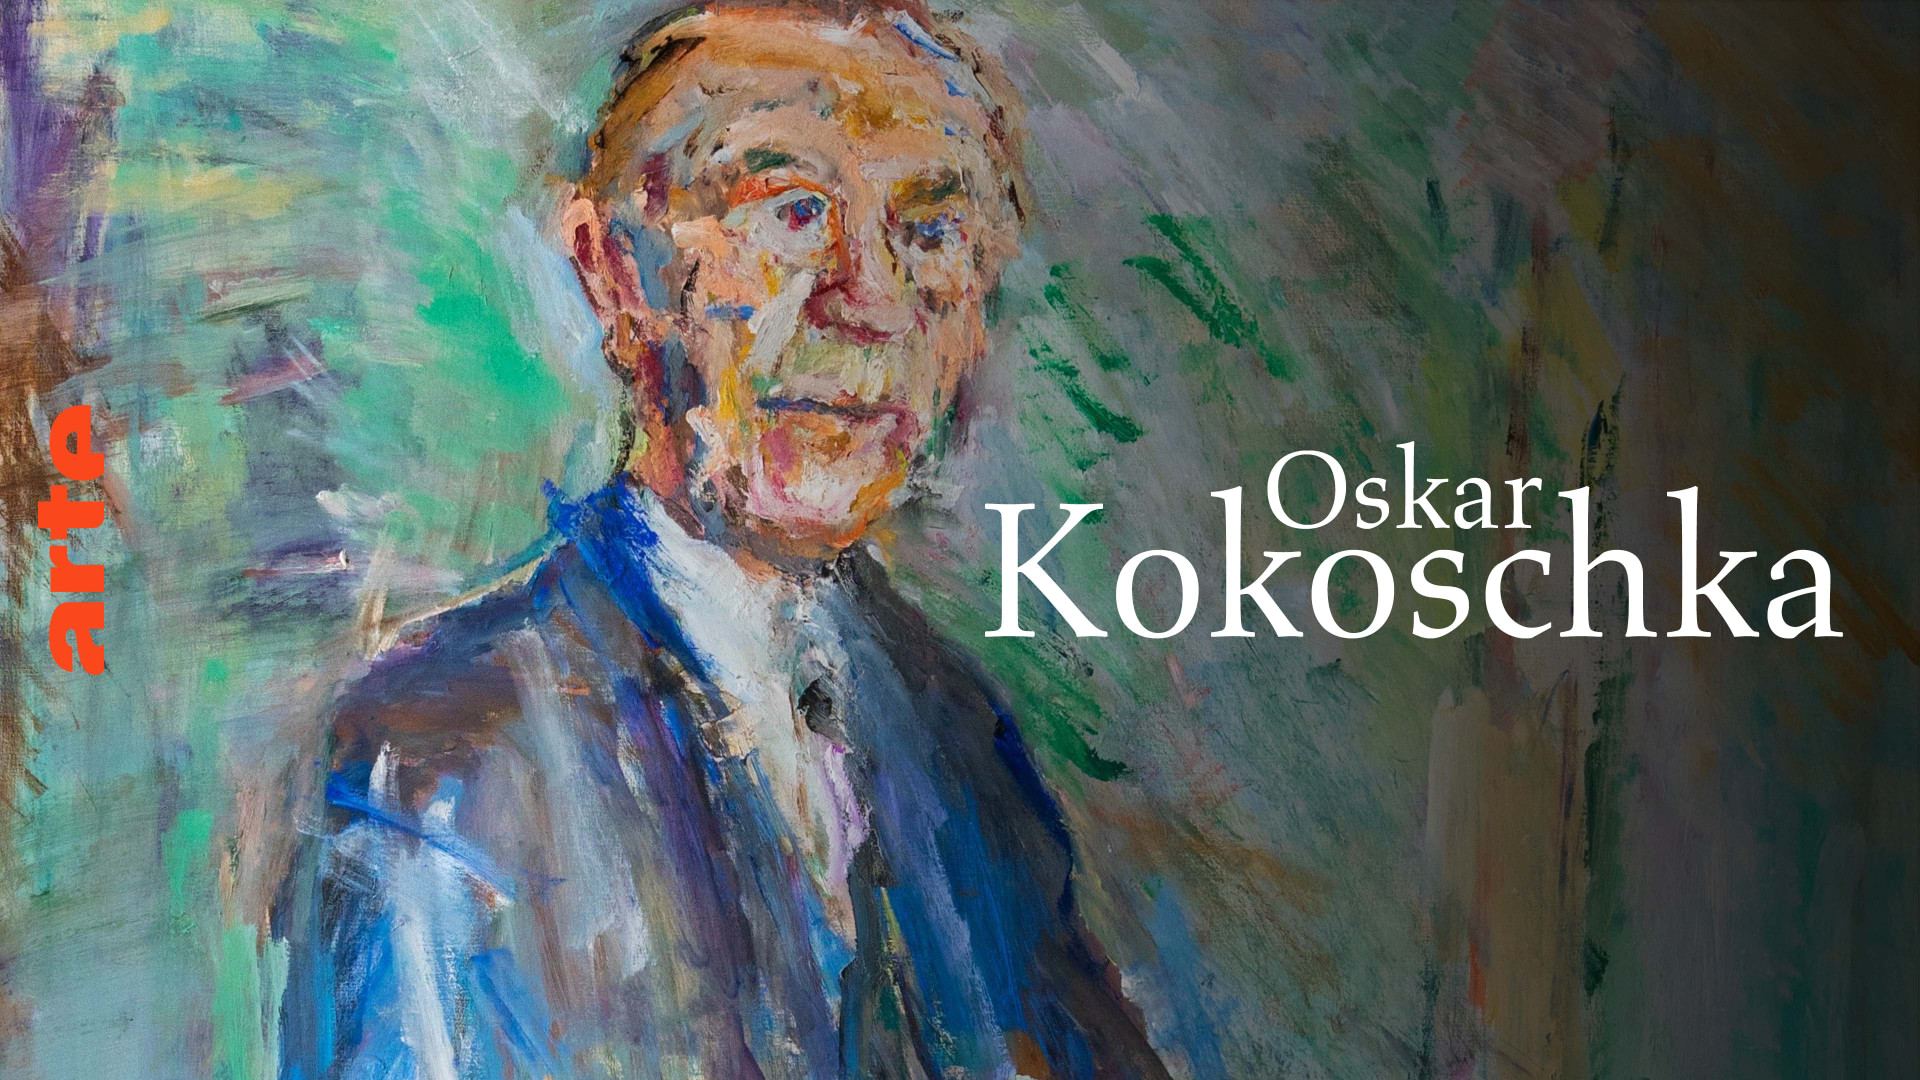 Un secolo di memorie del pittore austriaco Oskar Kokoschka